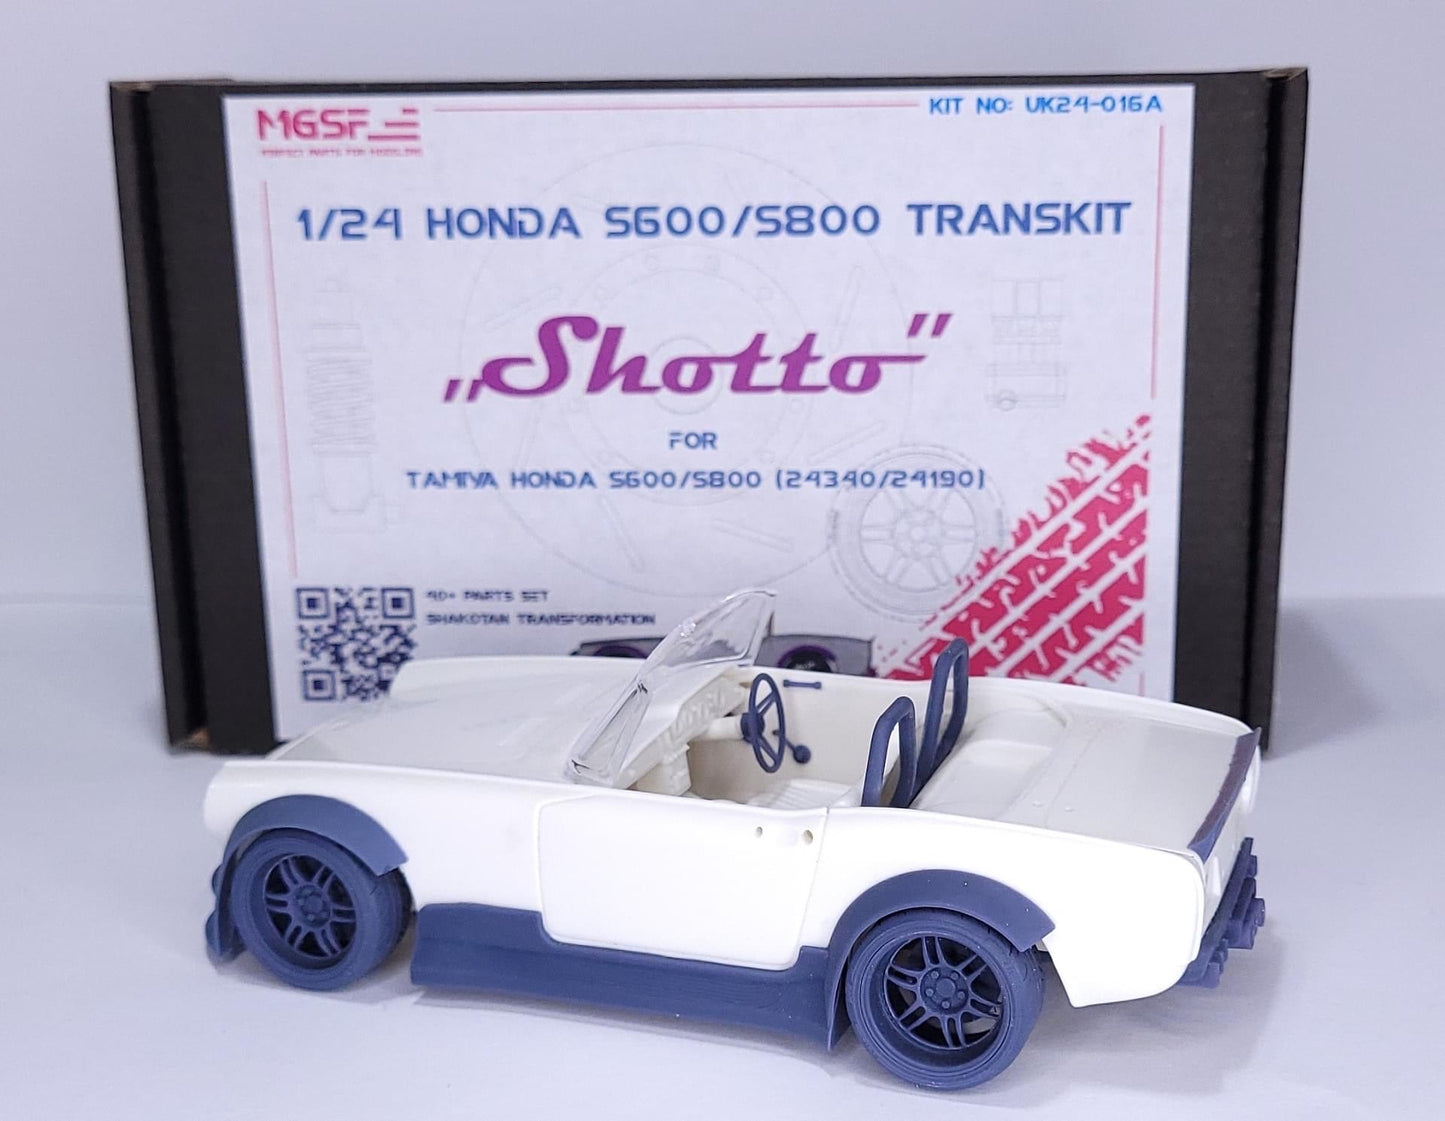 TRANSKIT HONDA S600/S800 SHAKOTAN SHOTTO